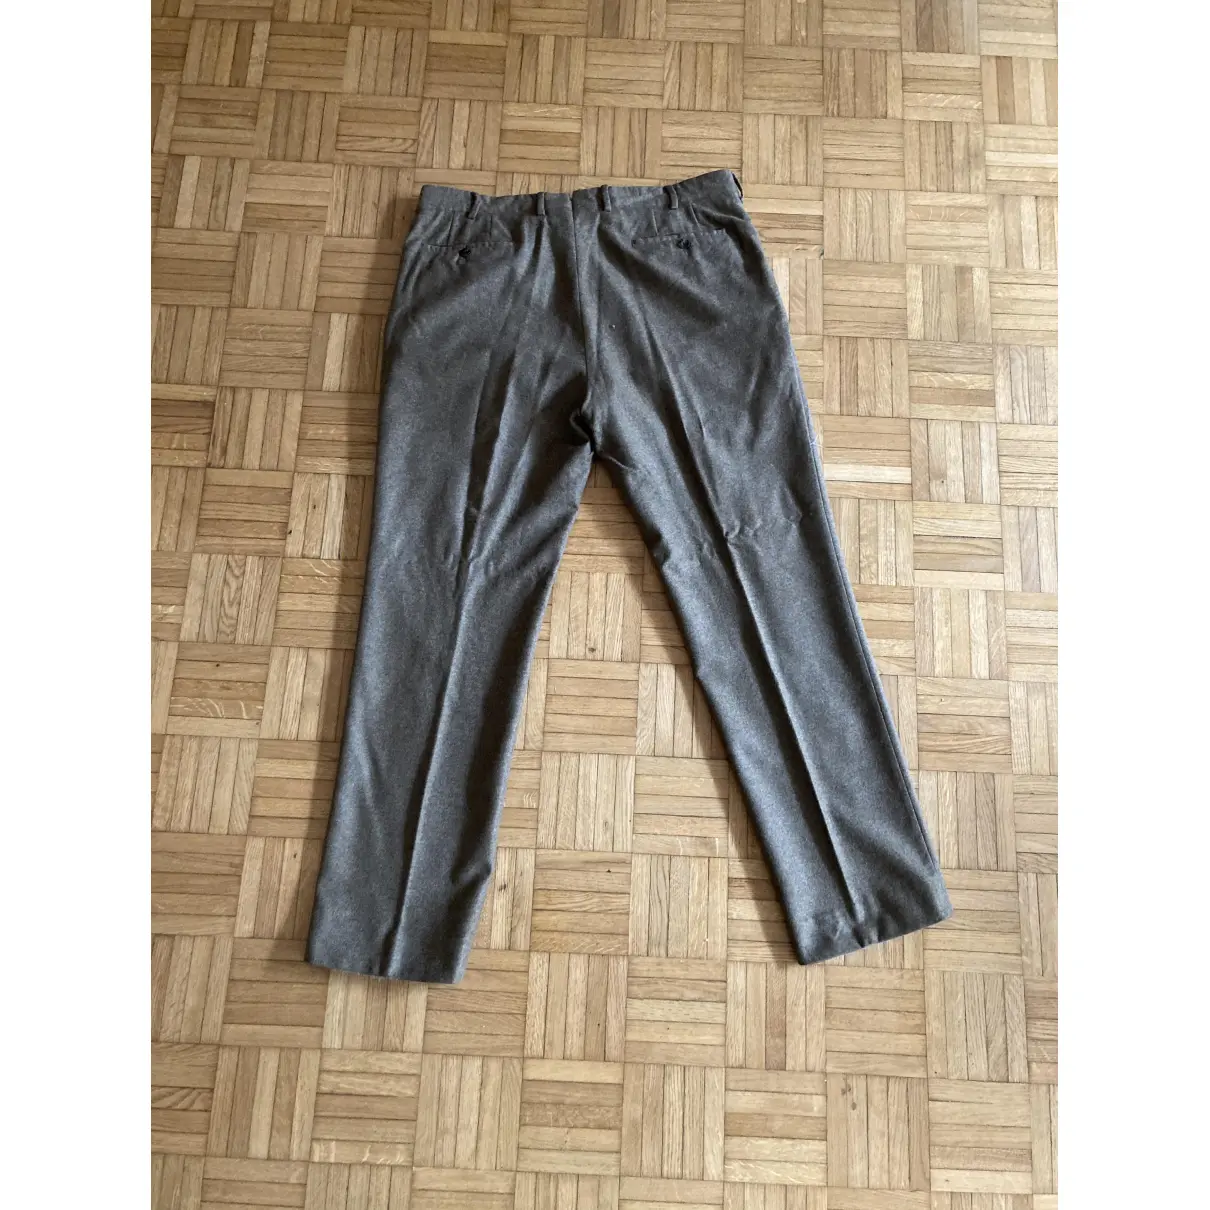 Buy Loro Piana Cashmere trousers online